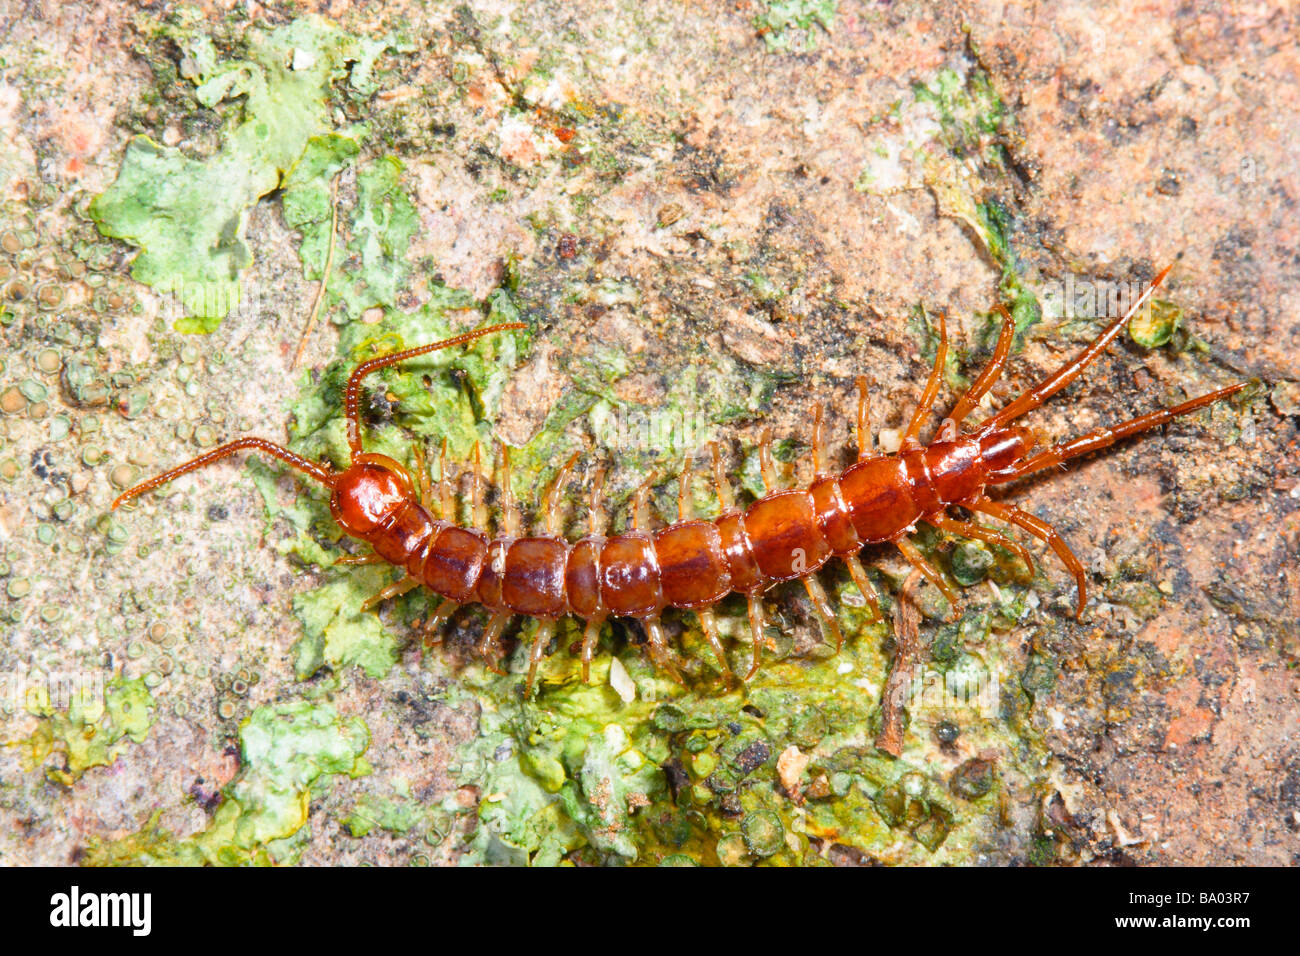 Centipede, Lithobius sp. On lichen Stock Photo